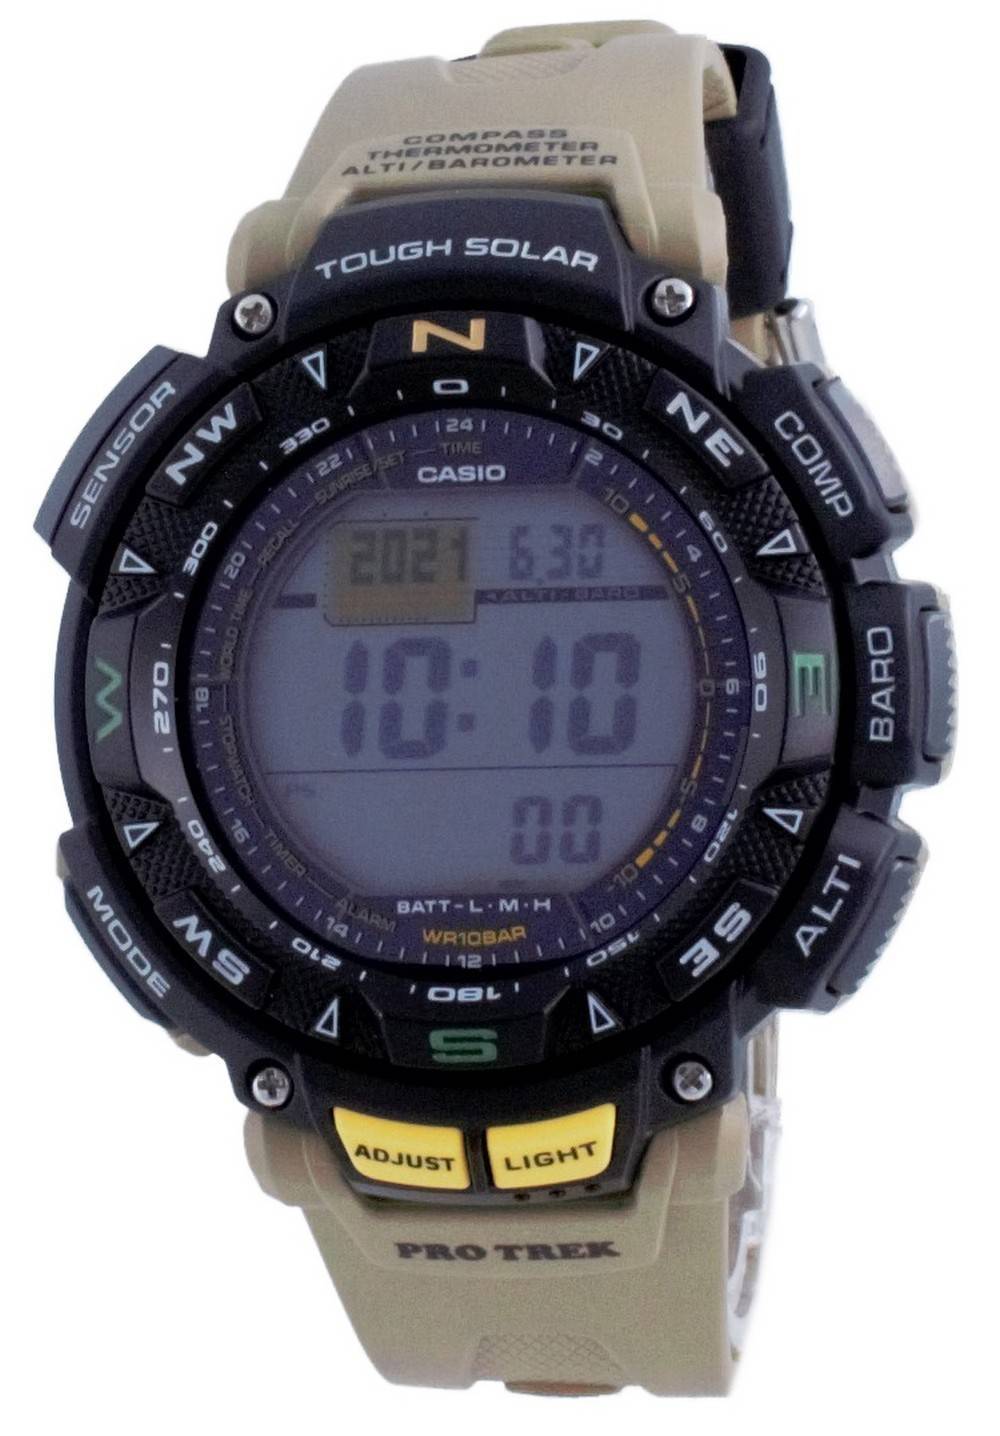 Casio Pro Trek Compass Altimeter Thermometer Watch PRG-240 PRG240-5 ...